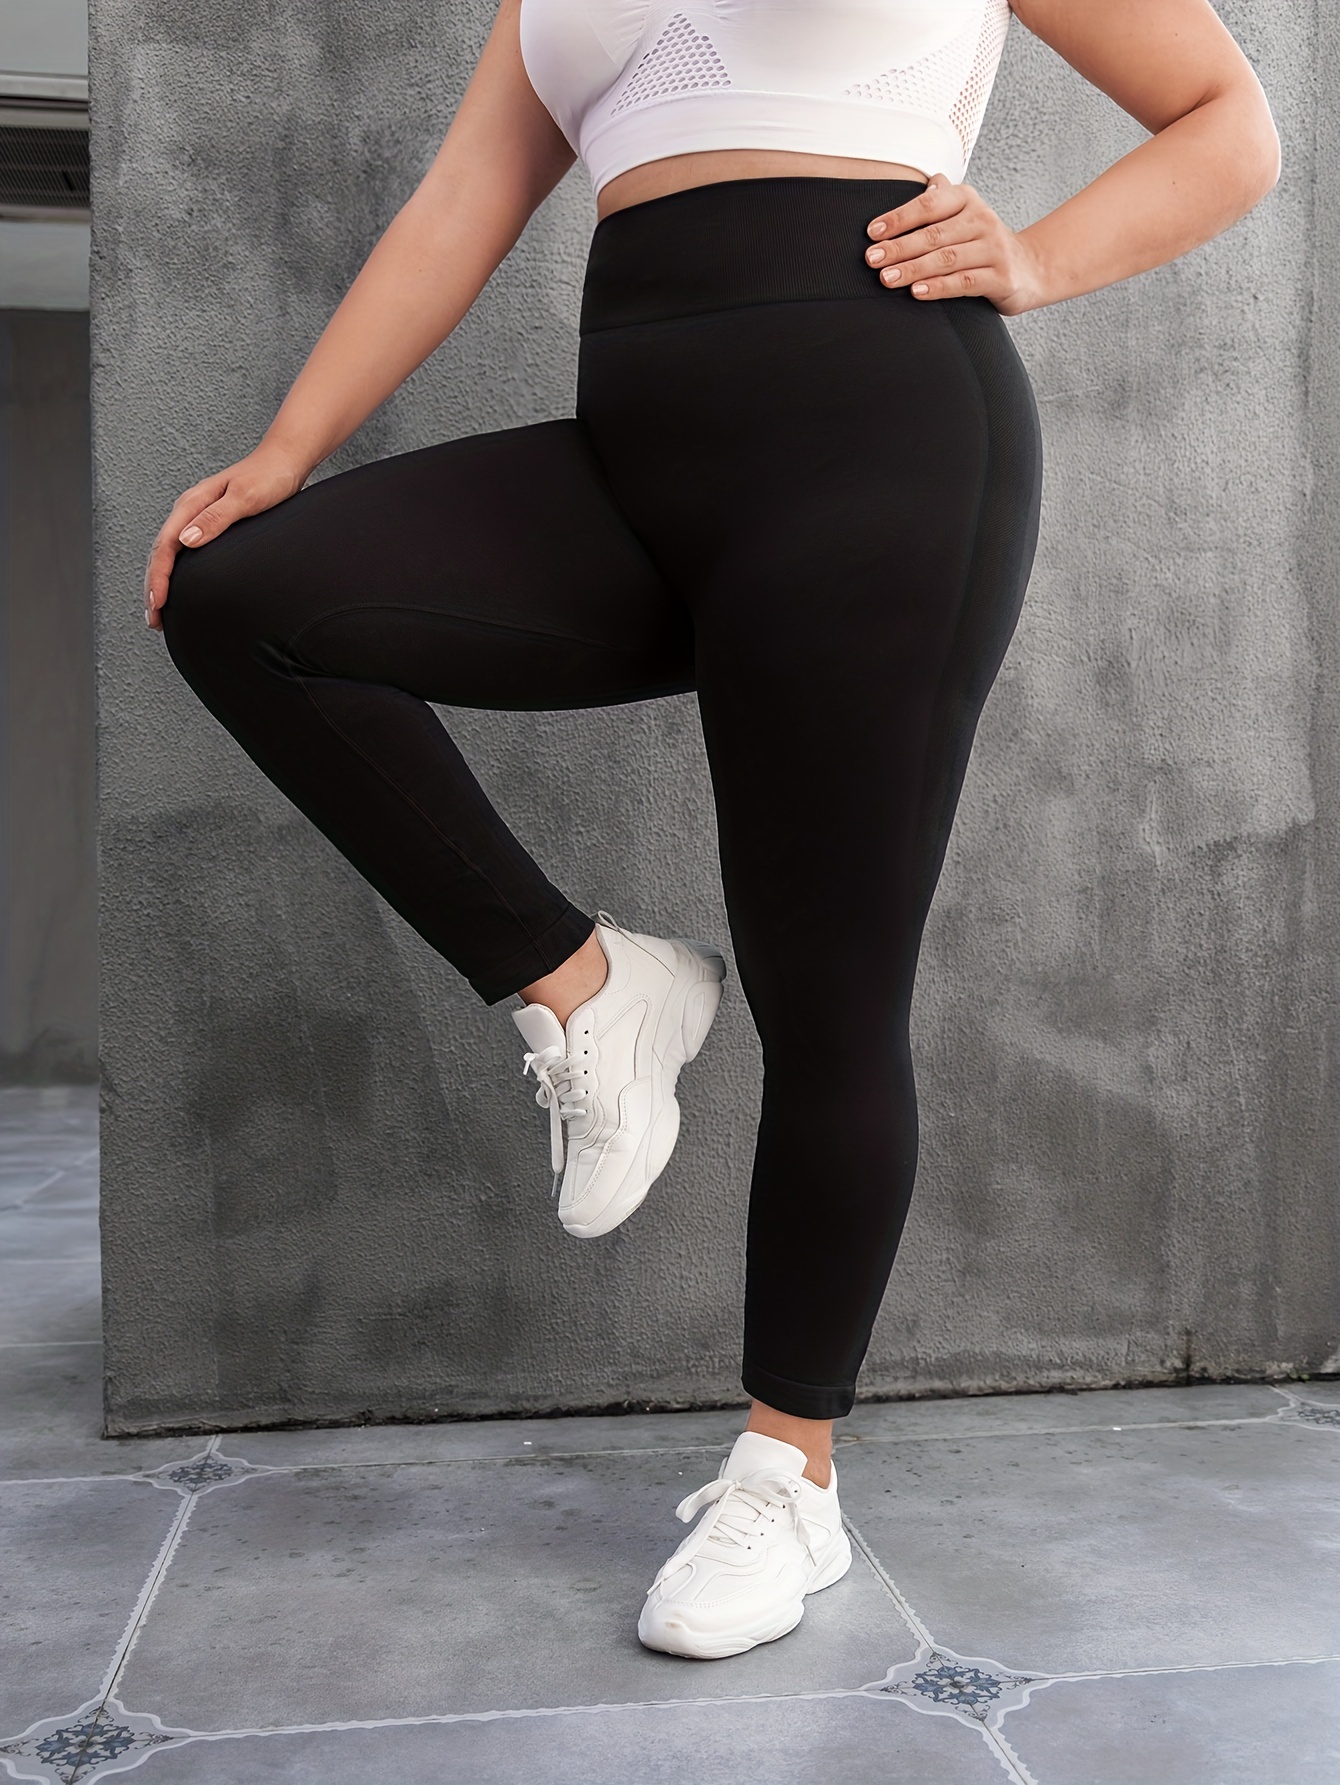 Stretchy Workout Pants, Plus Size Exercise Capris